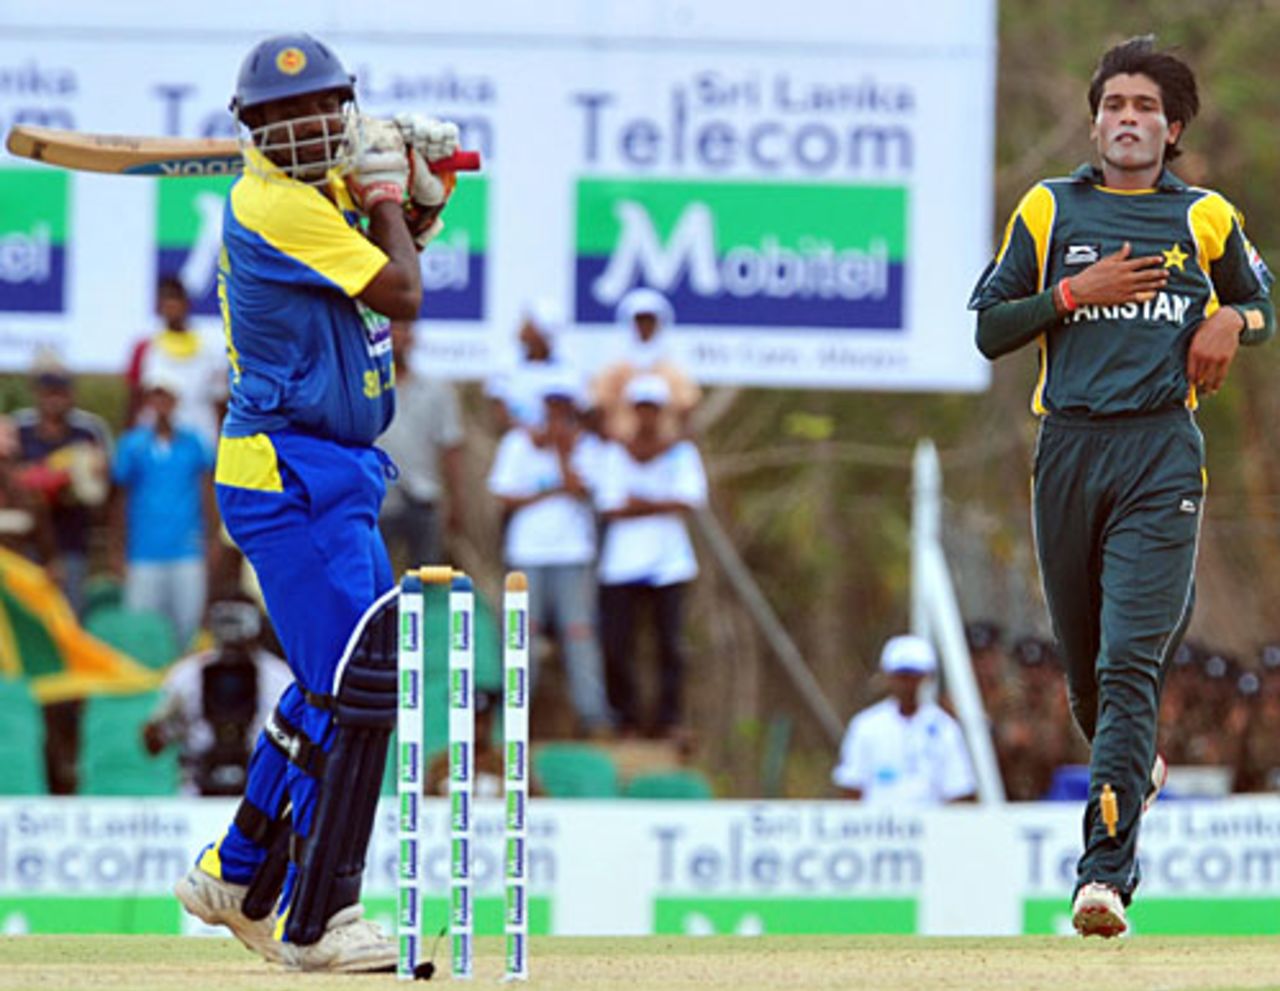 Muttiah Muralitharan is bowled by Mohammad Aamer for 32, Sri Lanka v Pakistan, 1st ODI, Dambulla, July 30, 2009 